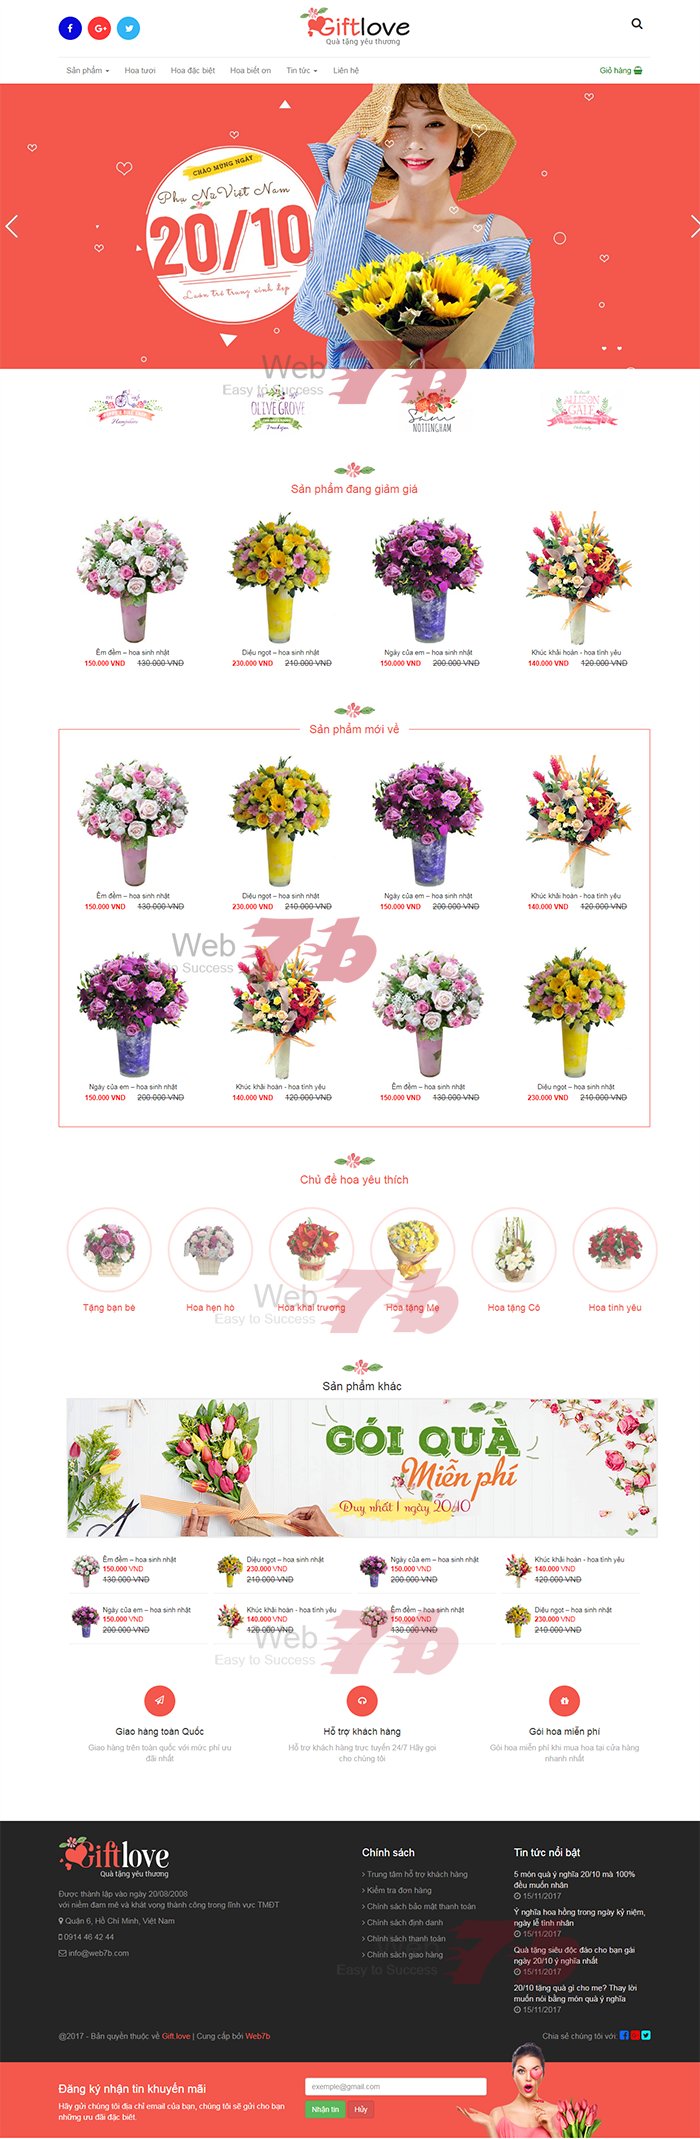 Mẫu website bán hoa tươi đẹp tuyệt vời!